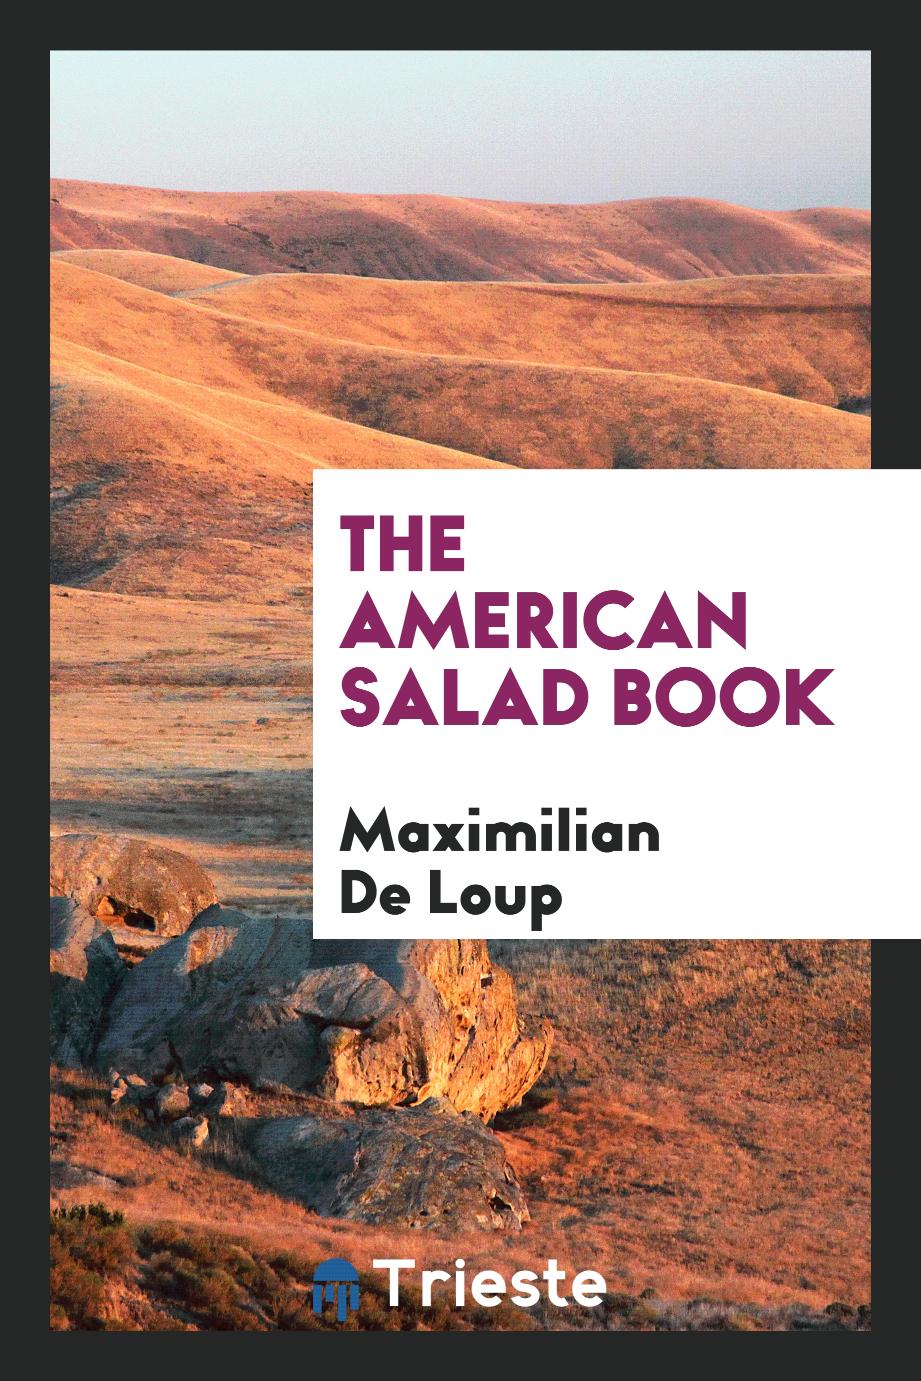 The American Salad Book